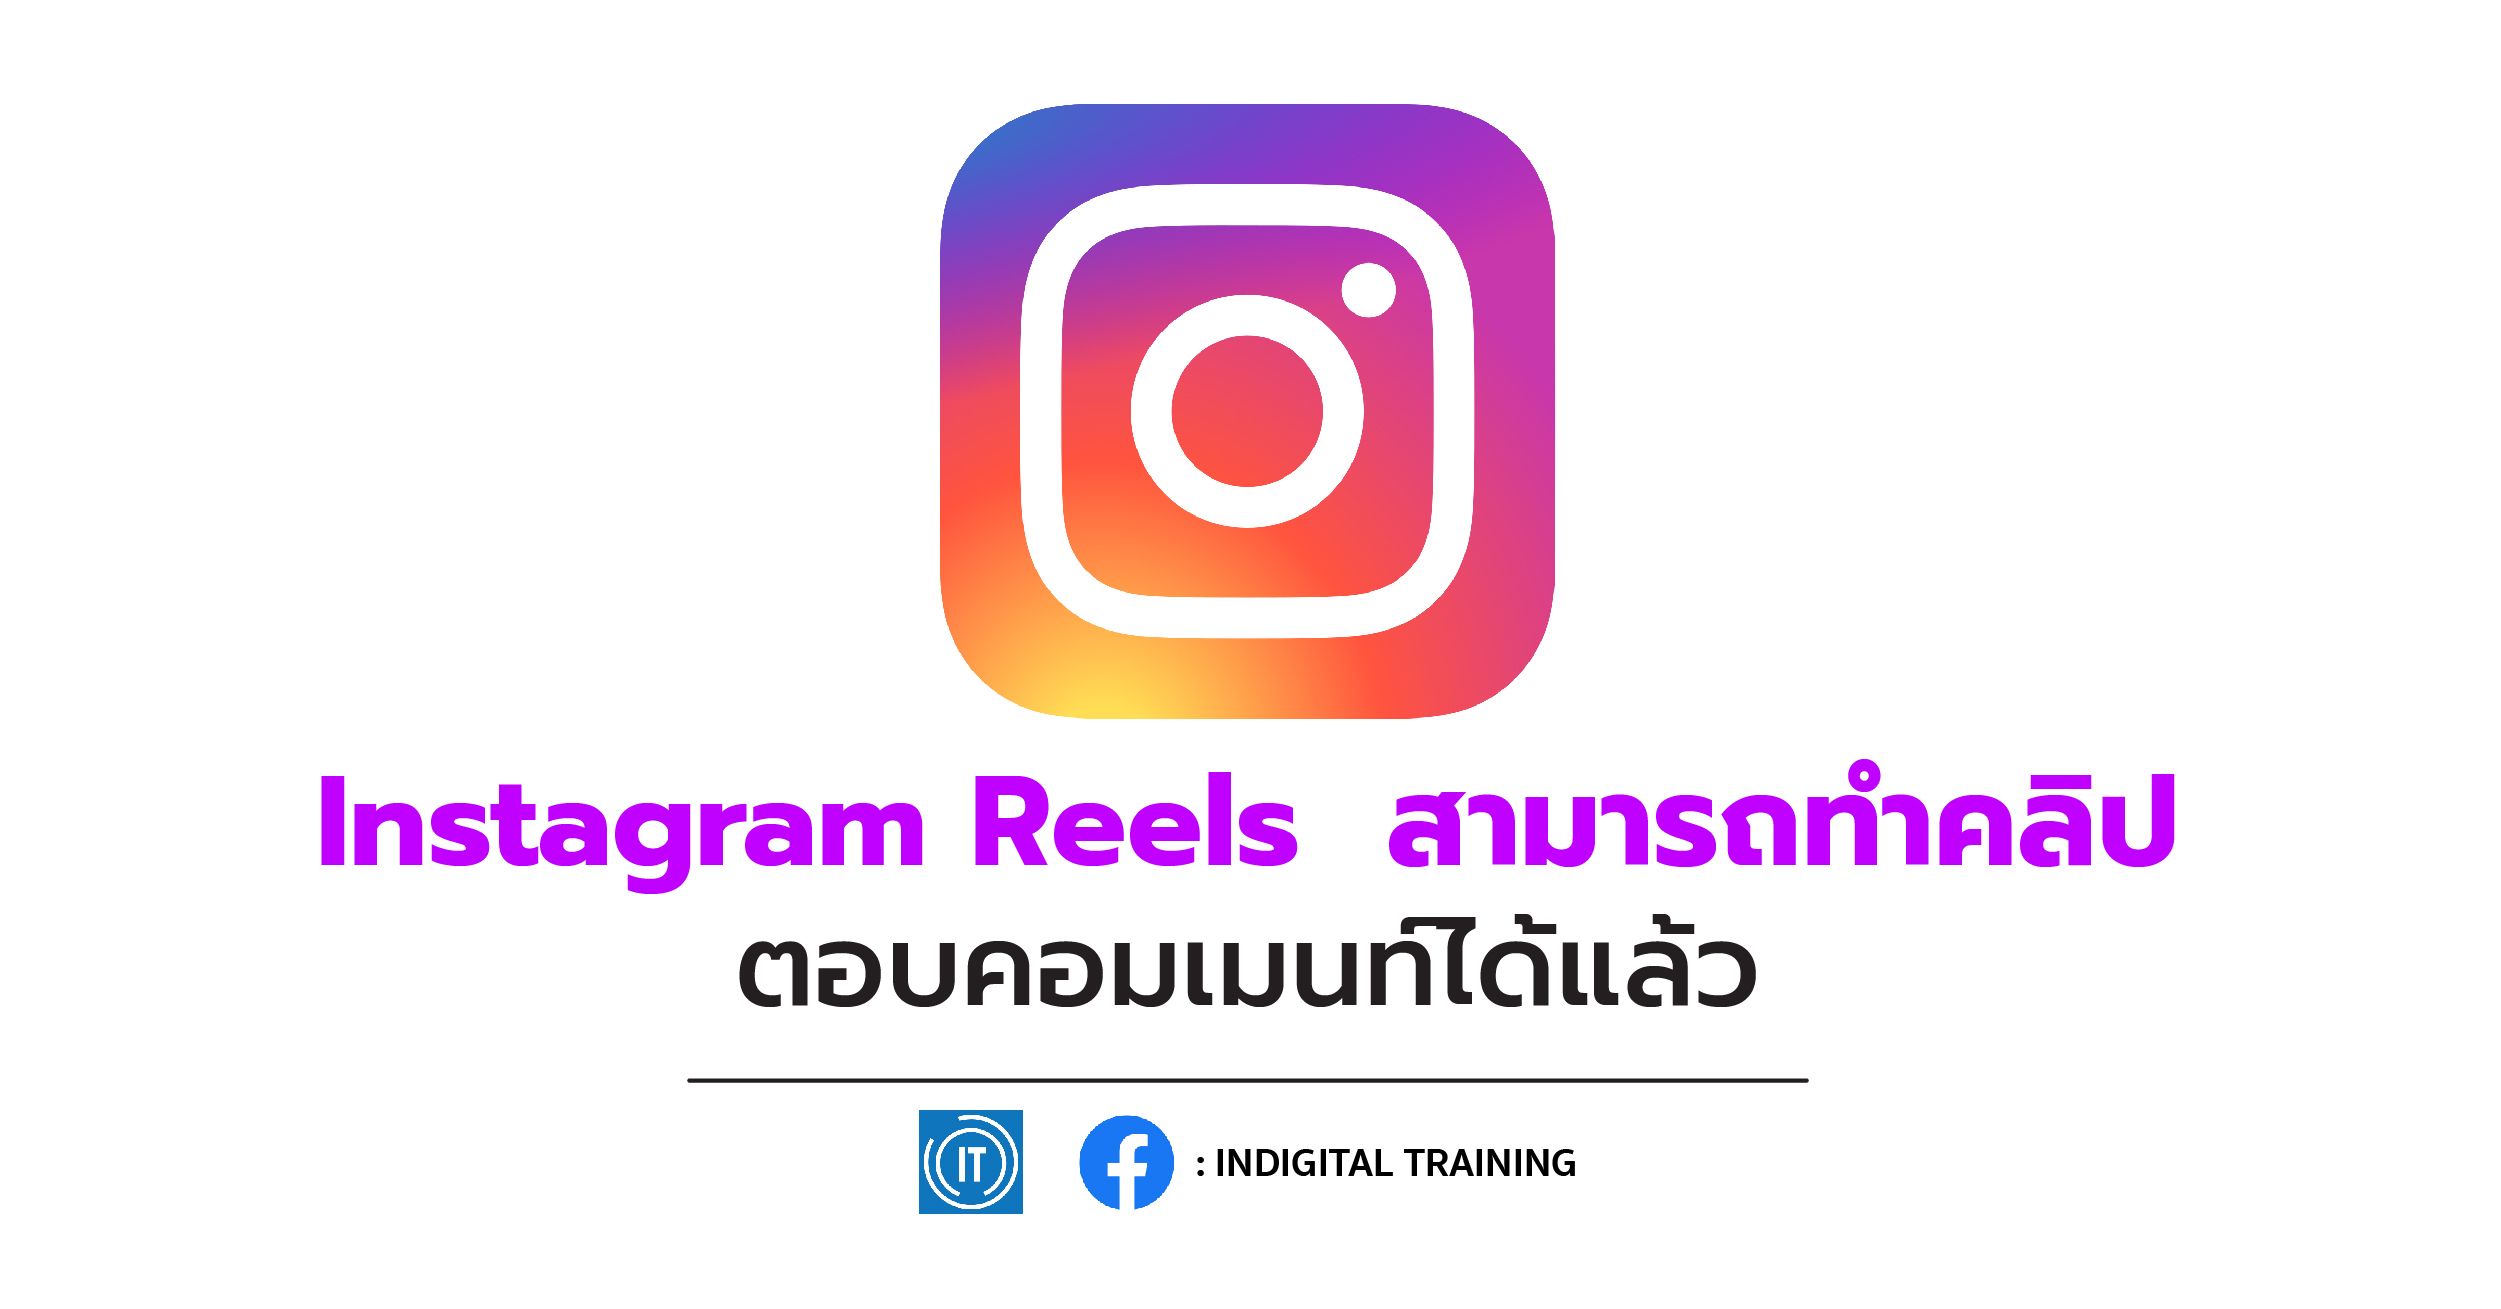 Instagram Reels สามารถทำคลิปตอบคอมเมนท์ได้แล้ว